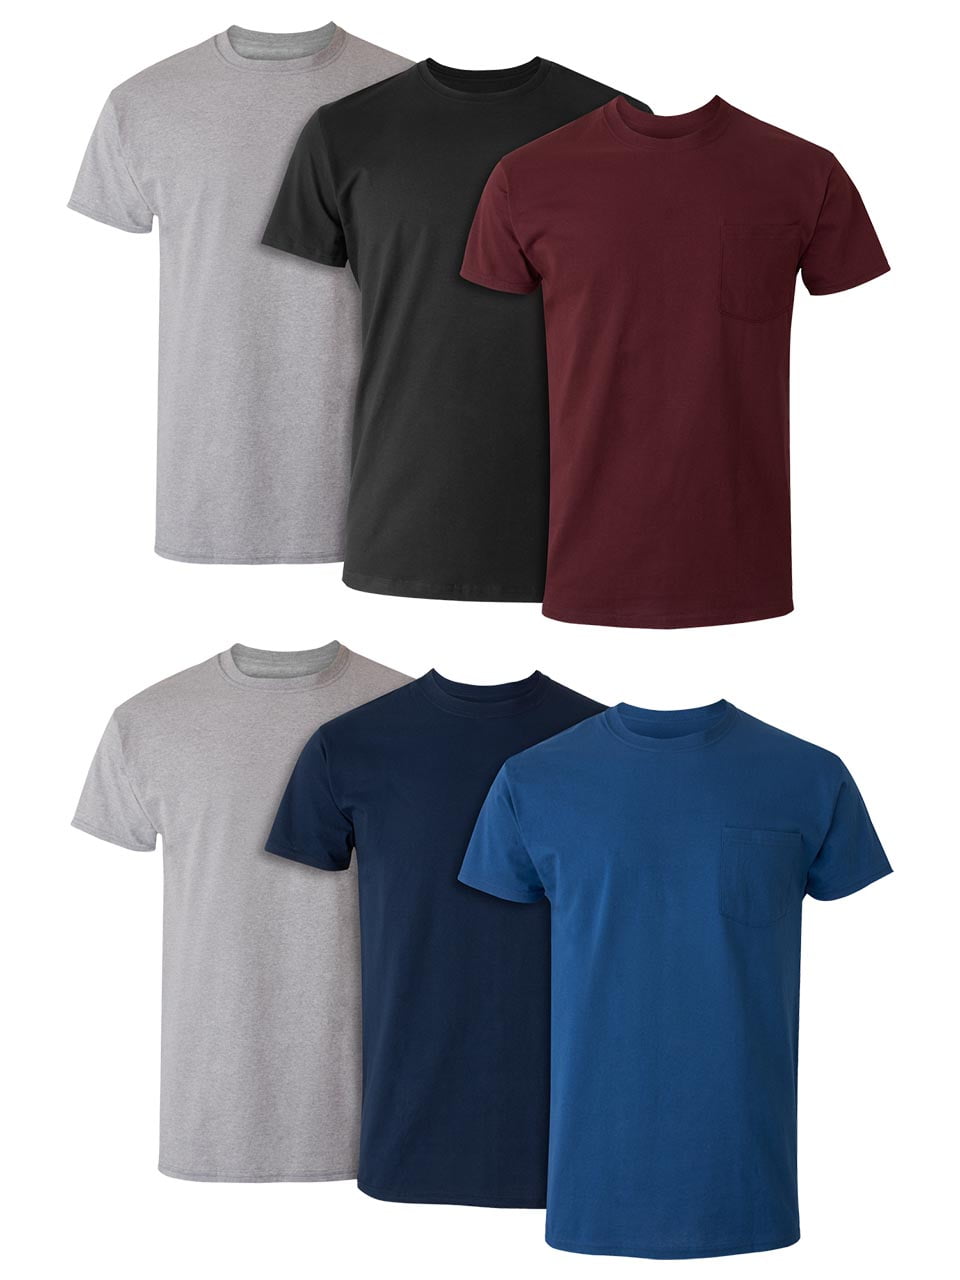 KIDS FASHION Shirts & T-shirts Sports Blue/Multicolored 7Y Joma T-shirt discount 94% 